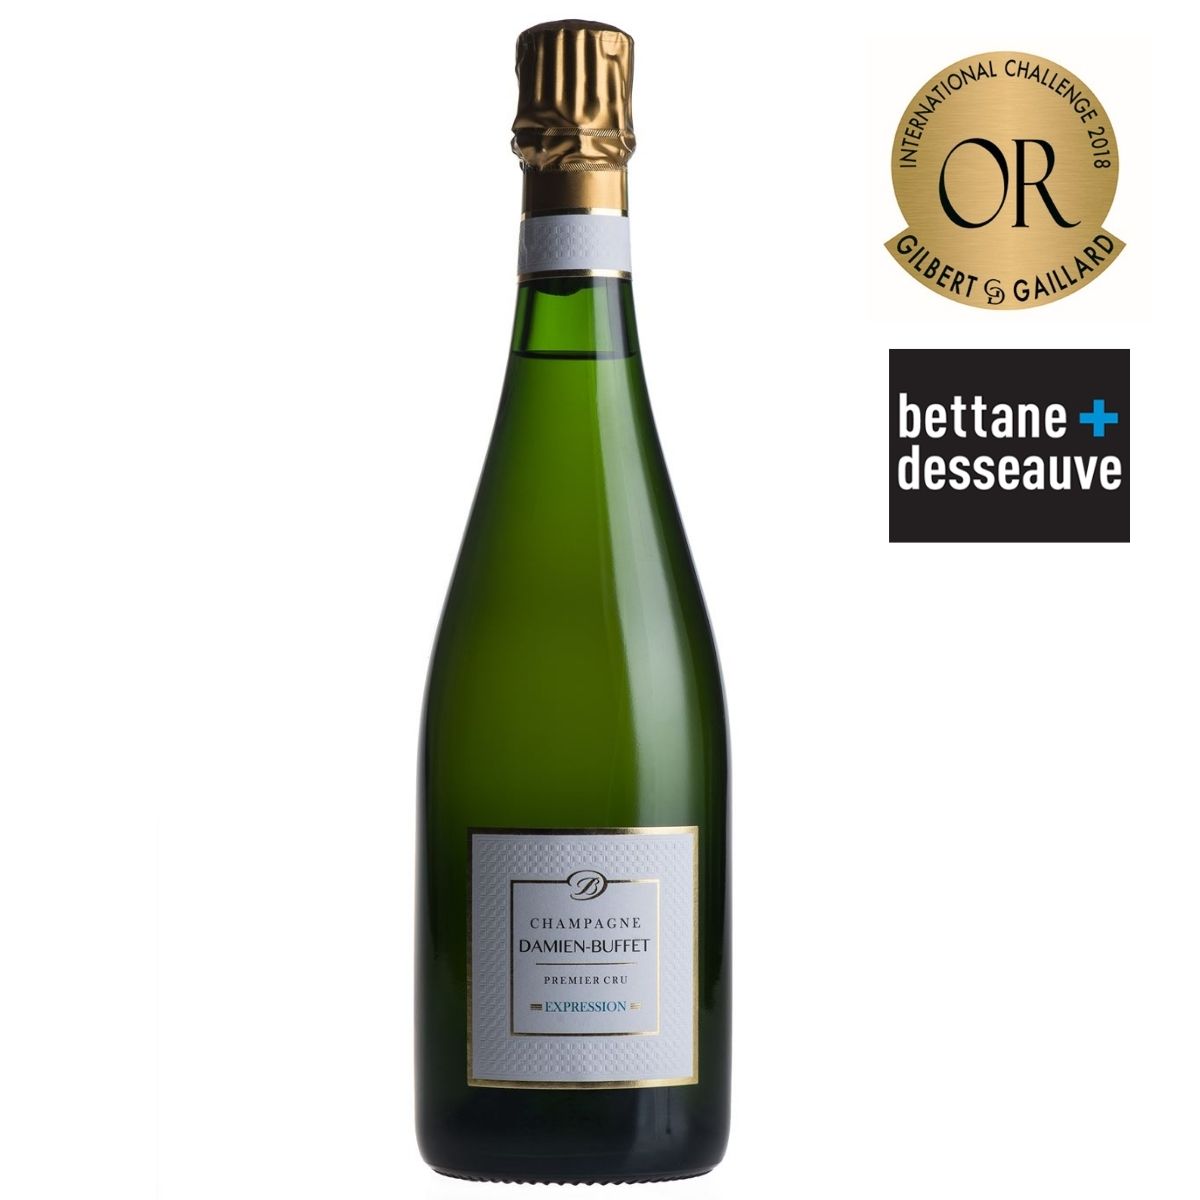 Champagne Damien Buffet Expression - Champagne 1er Cru